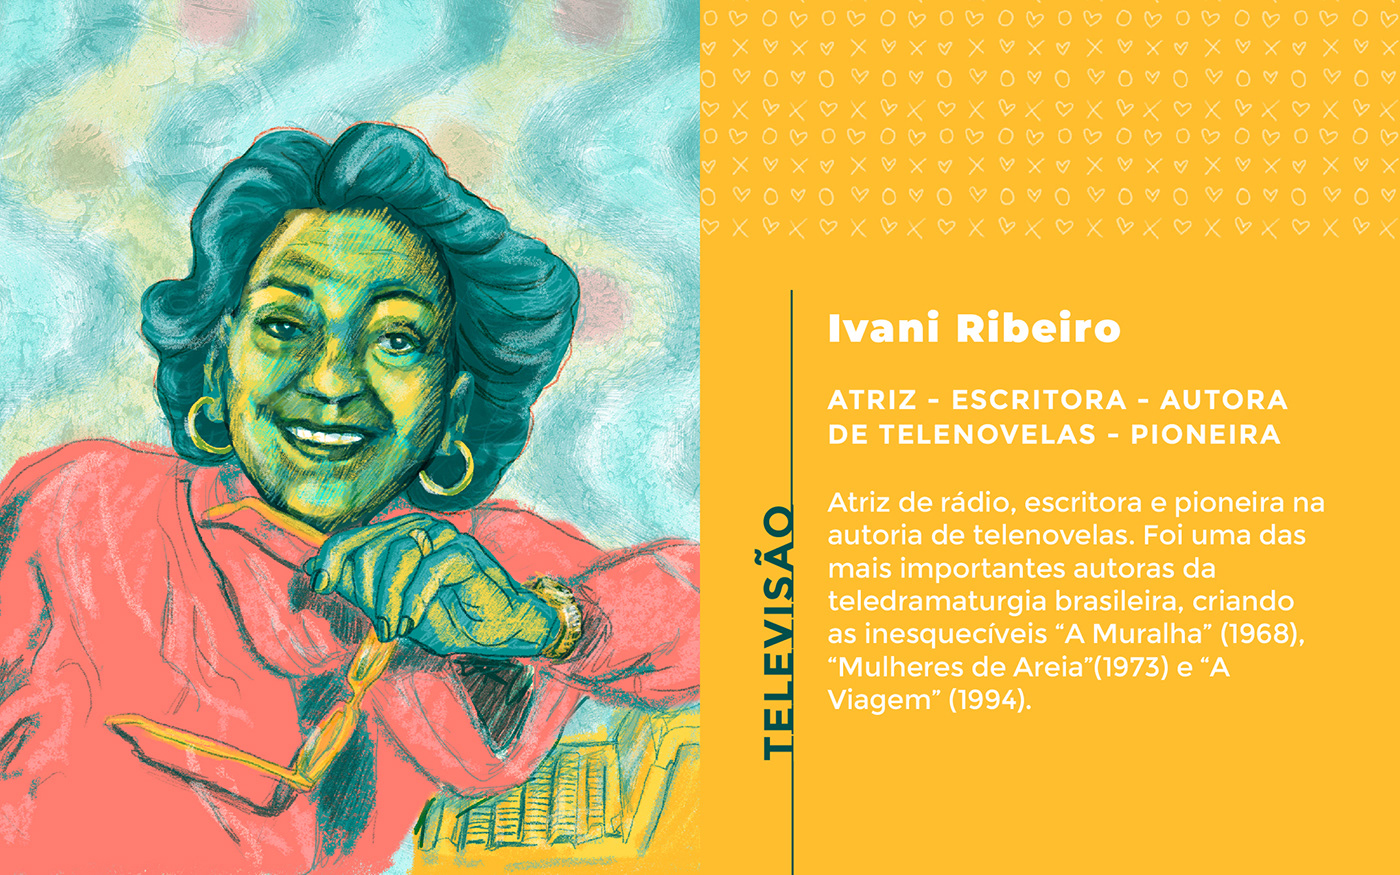 An illustrated portrait of Ivani Ribeiro, a famous brazilian soap opera writer.